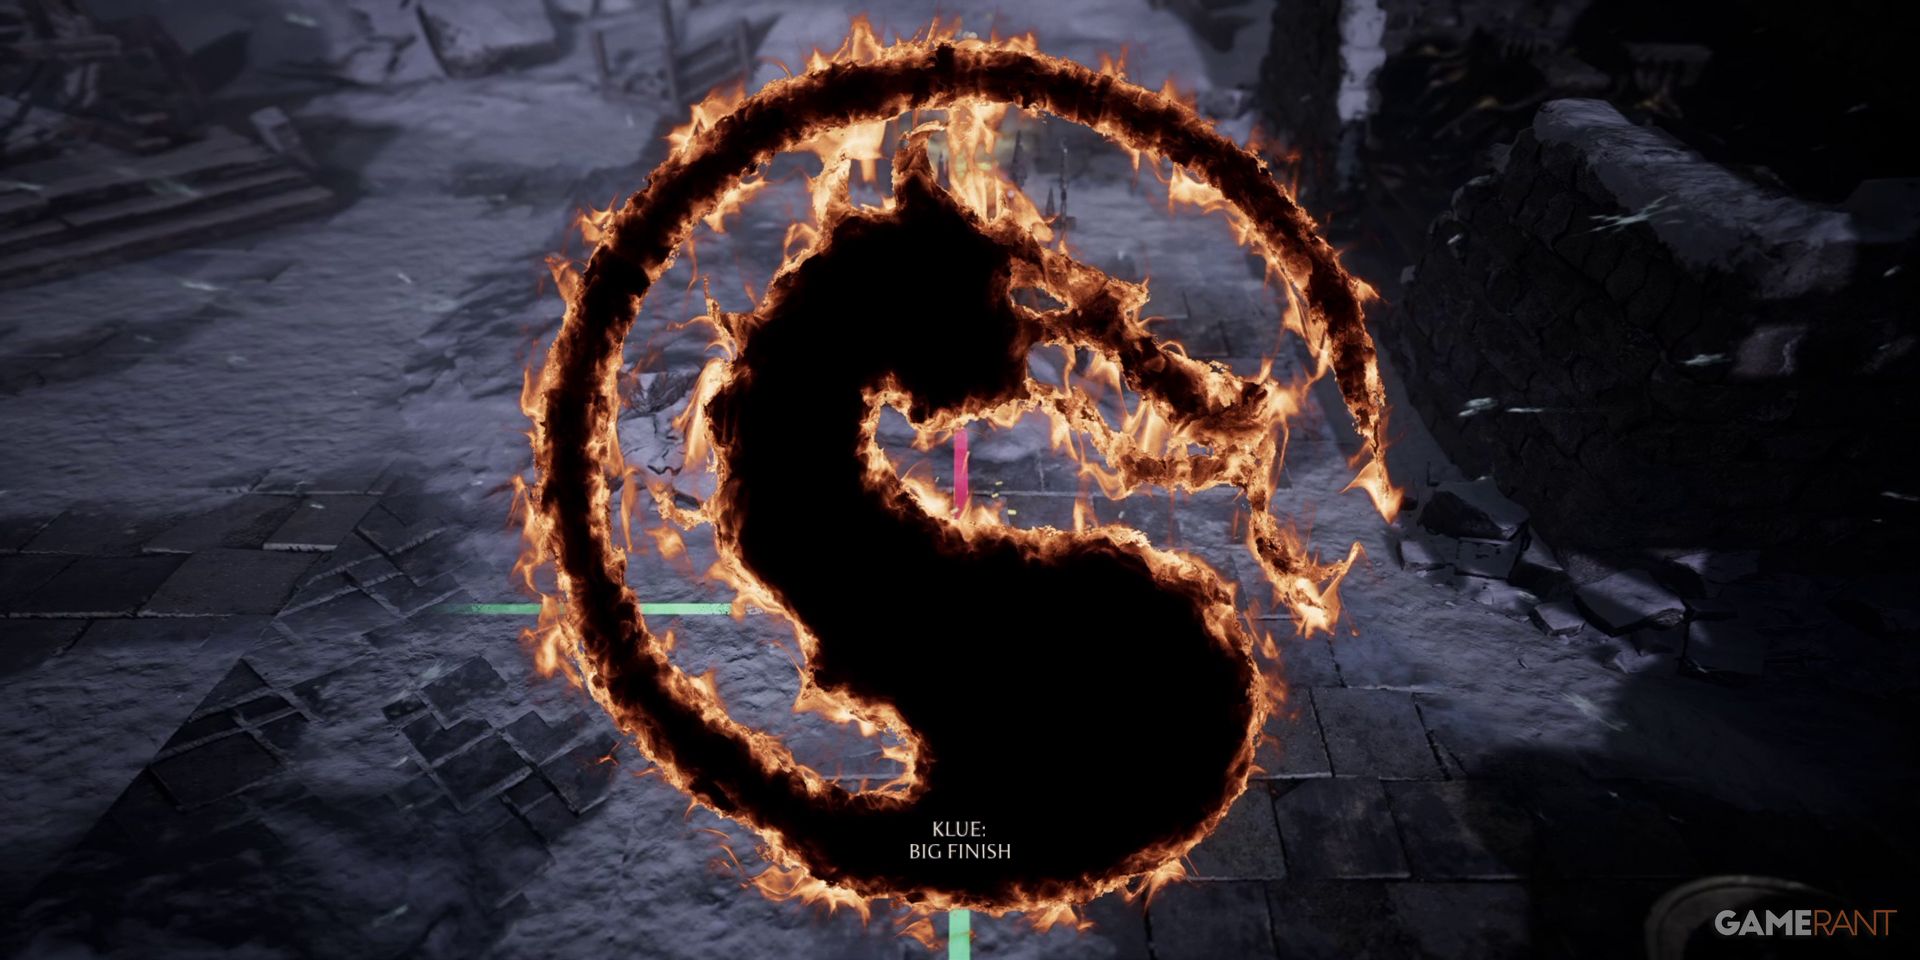 The BIG FINISH Klue in Season 3 of Mortal Kombat 1's Invasions Mode